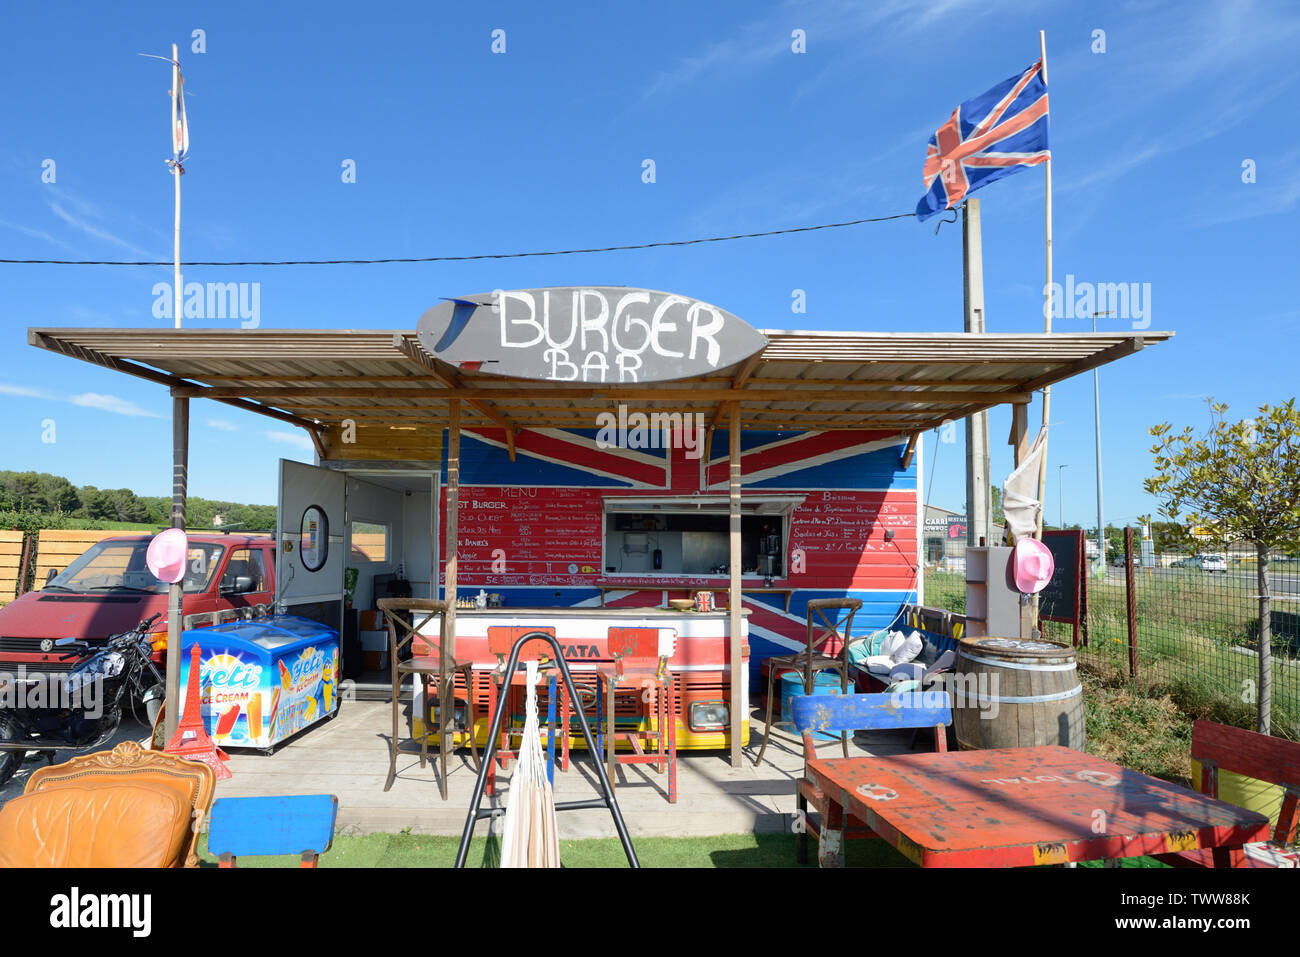 British-Themed Roadside Burger Bar or Burger Restaurant with Union Jack Flag near Aix-en-Provence Provence France Stock Photo